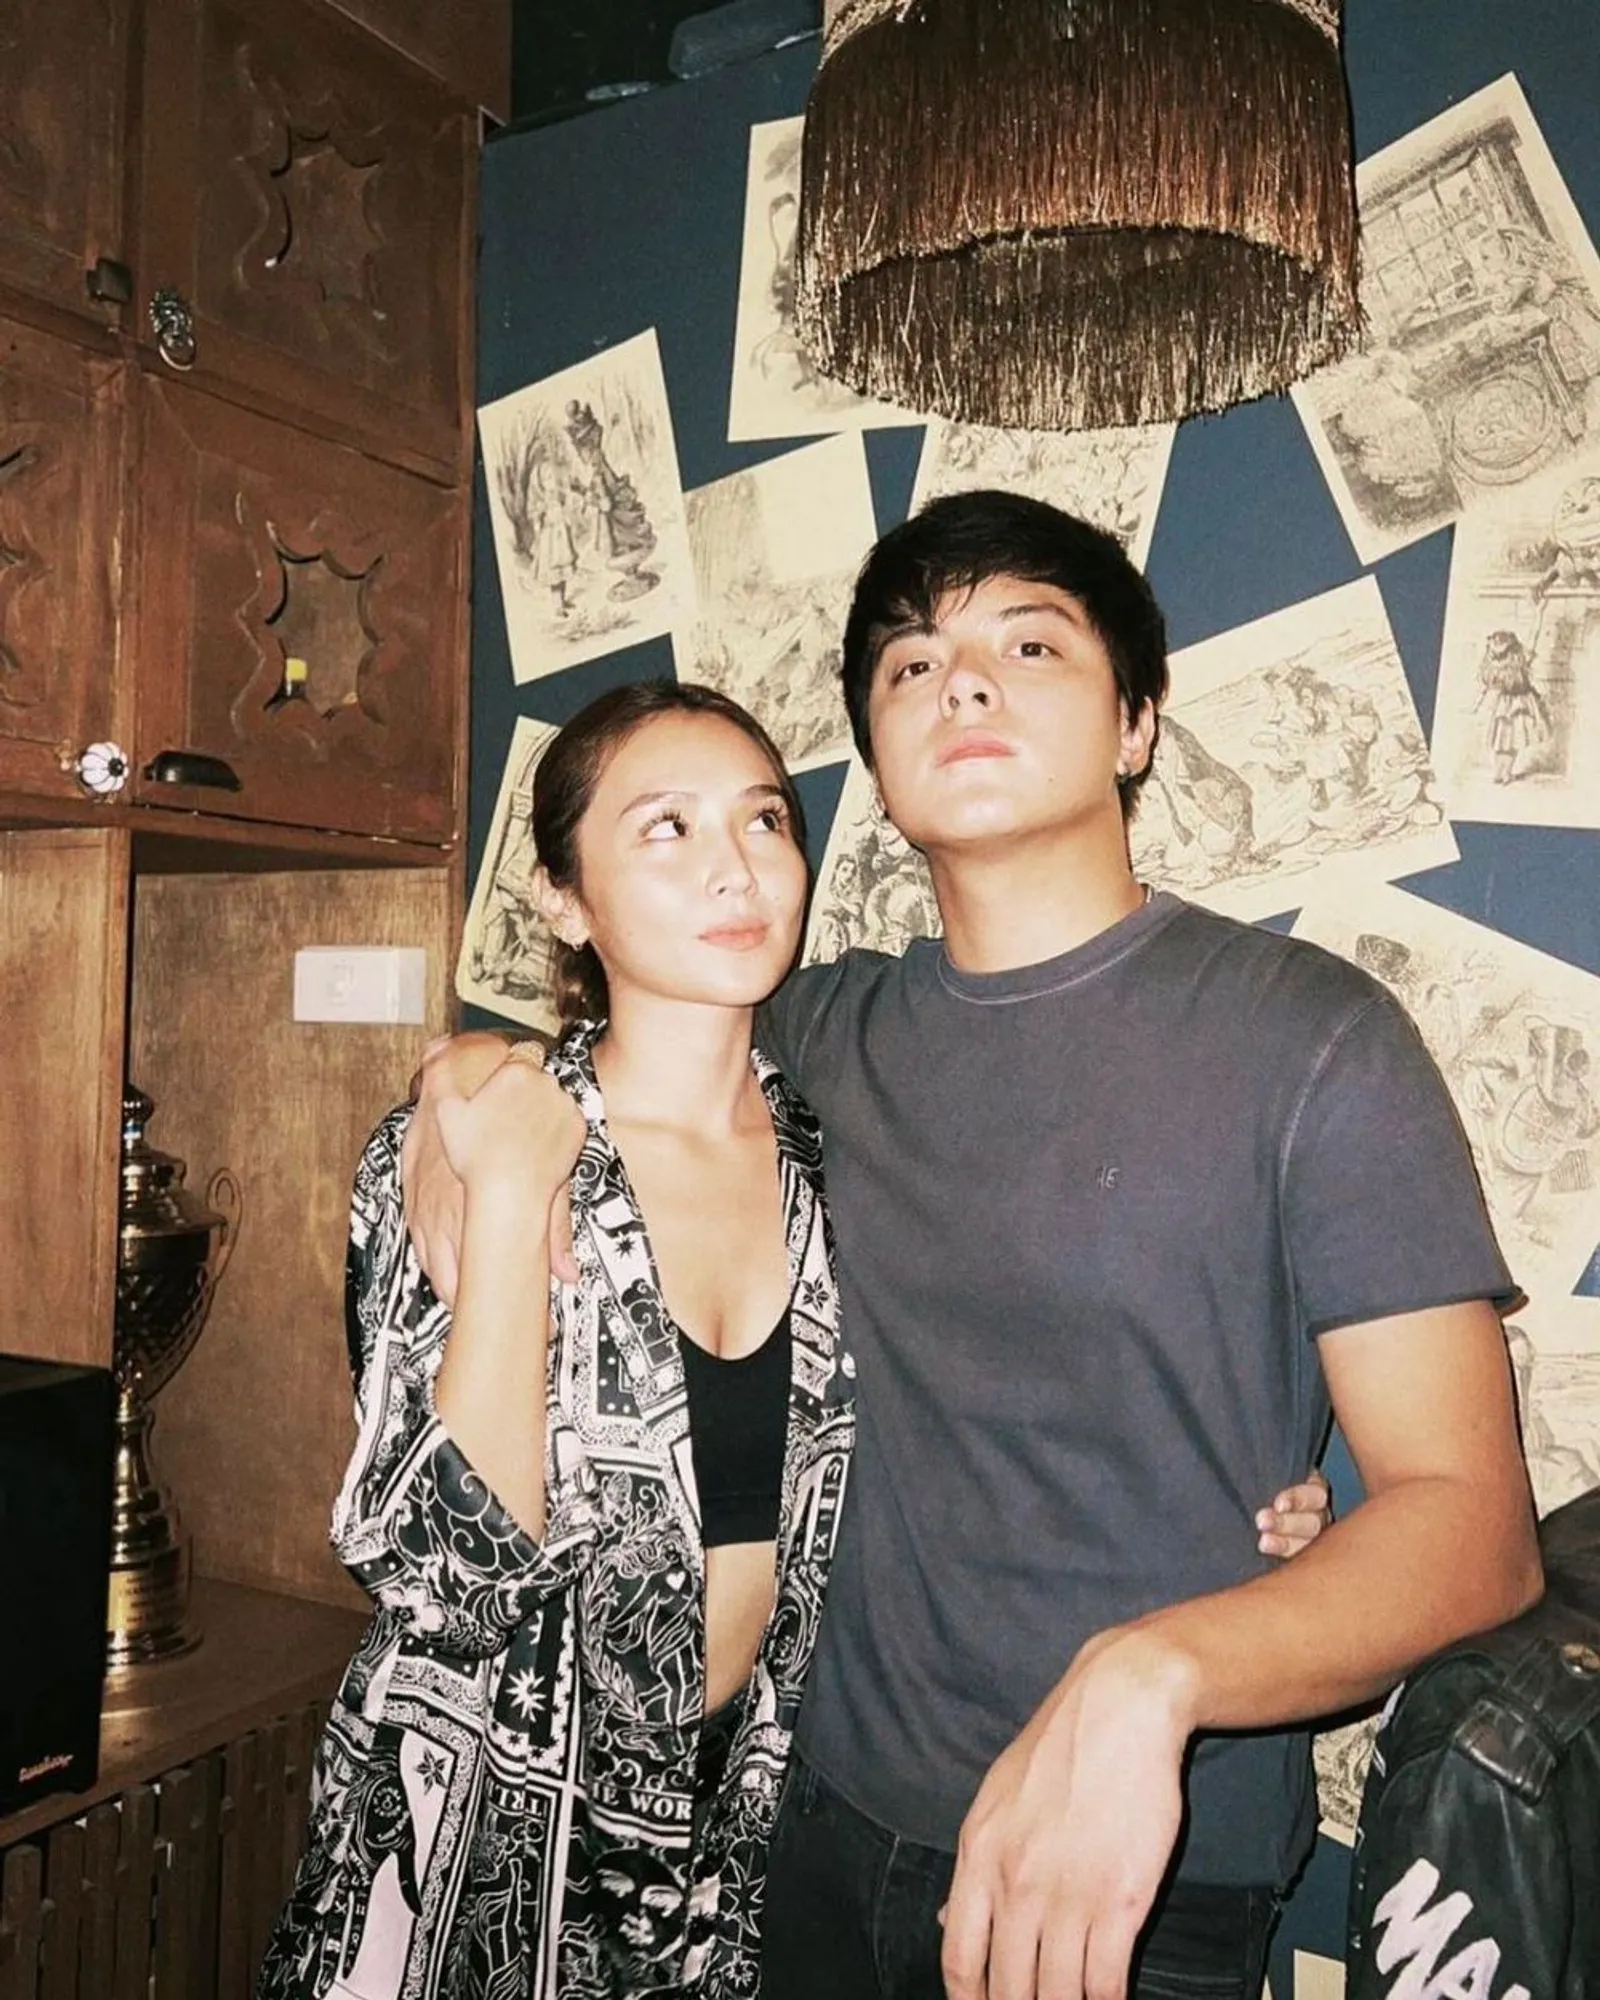 Putus! Kisah Cinta Artis Filipina Kathryn Bernardo & Daniel Padilla